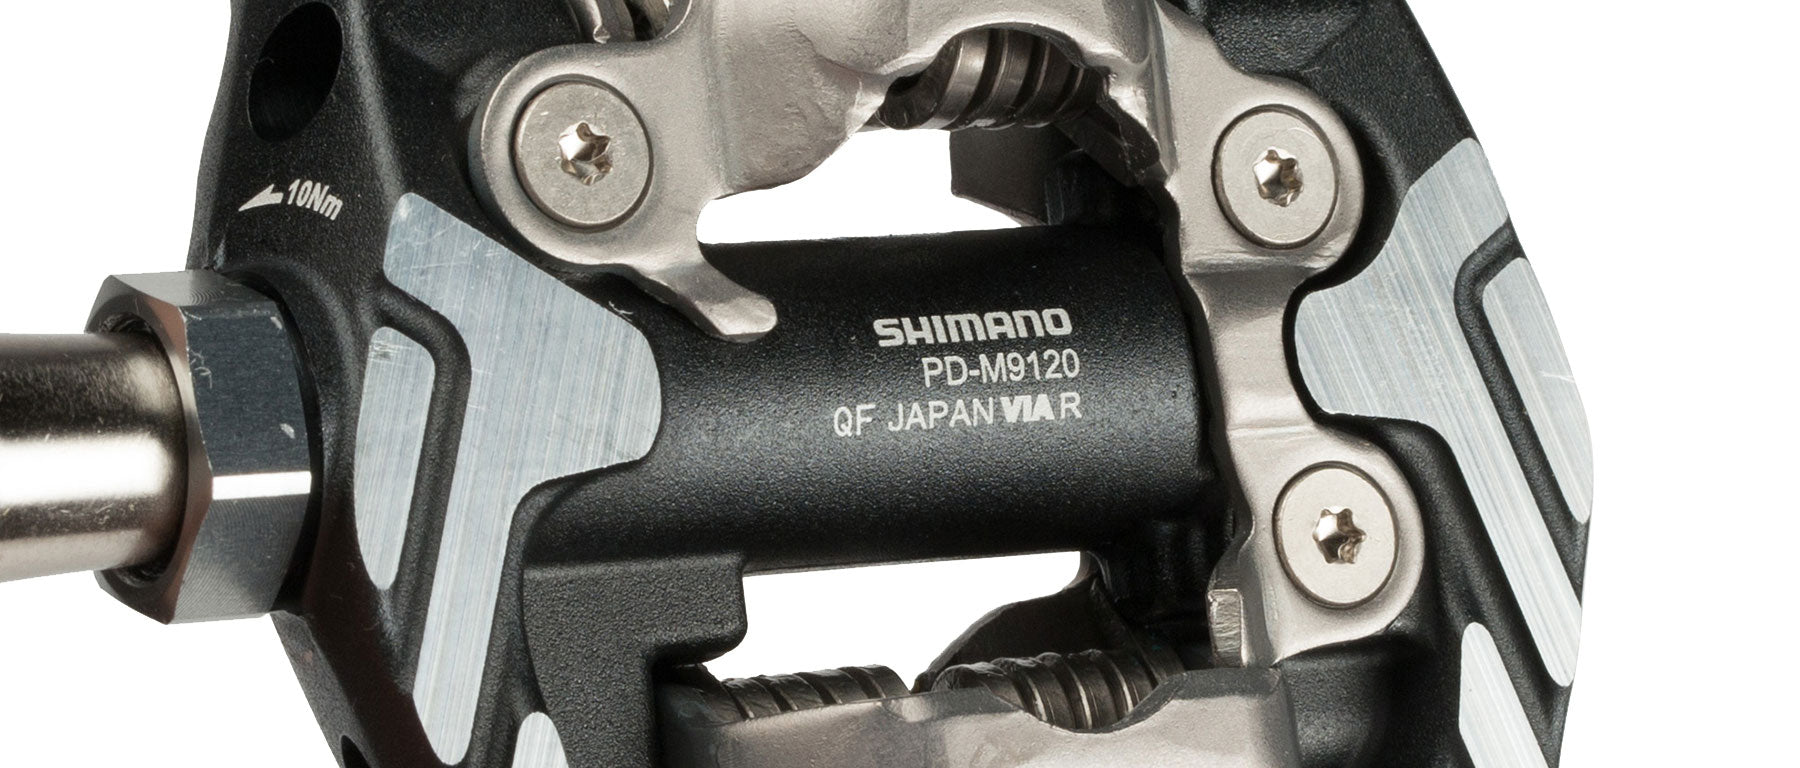 Shimano XTR PD-M9120 SPD Pedals